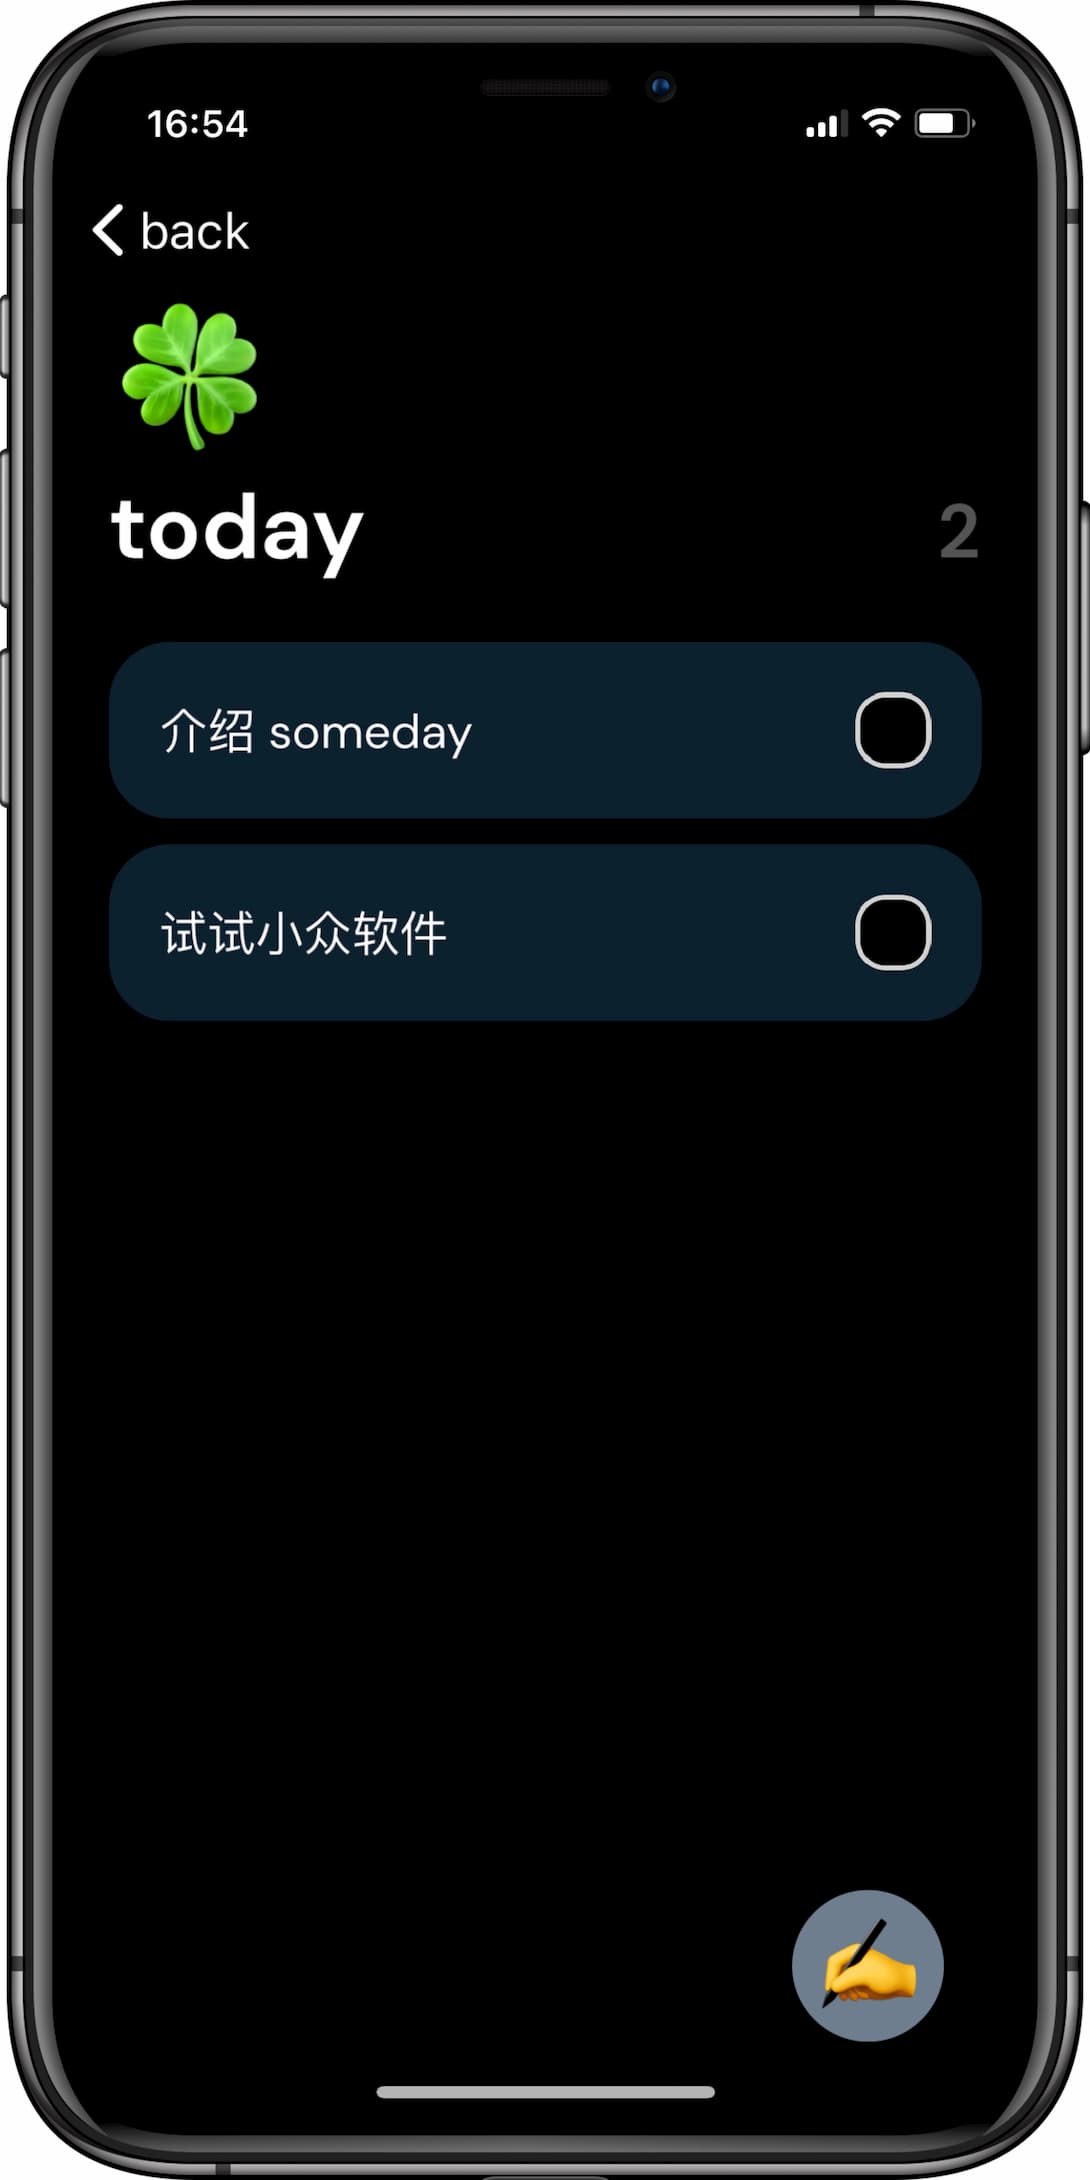 someday - 极简化任务管理，只有 3 个分类：今天、明天和某天[iPhone] 2